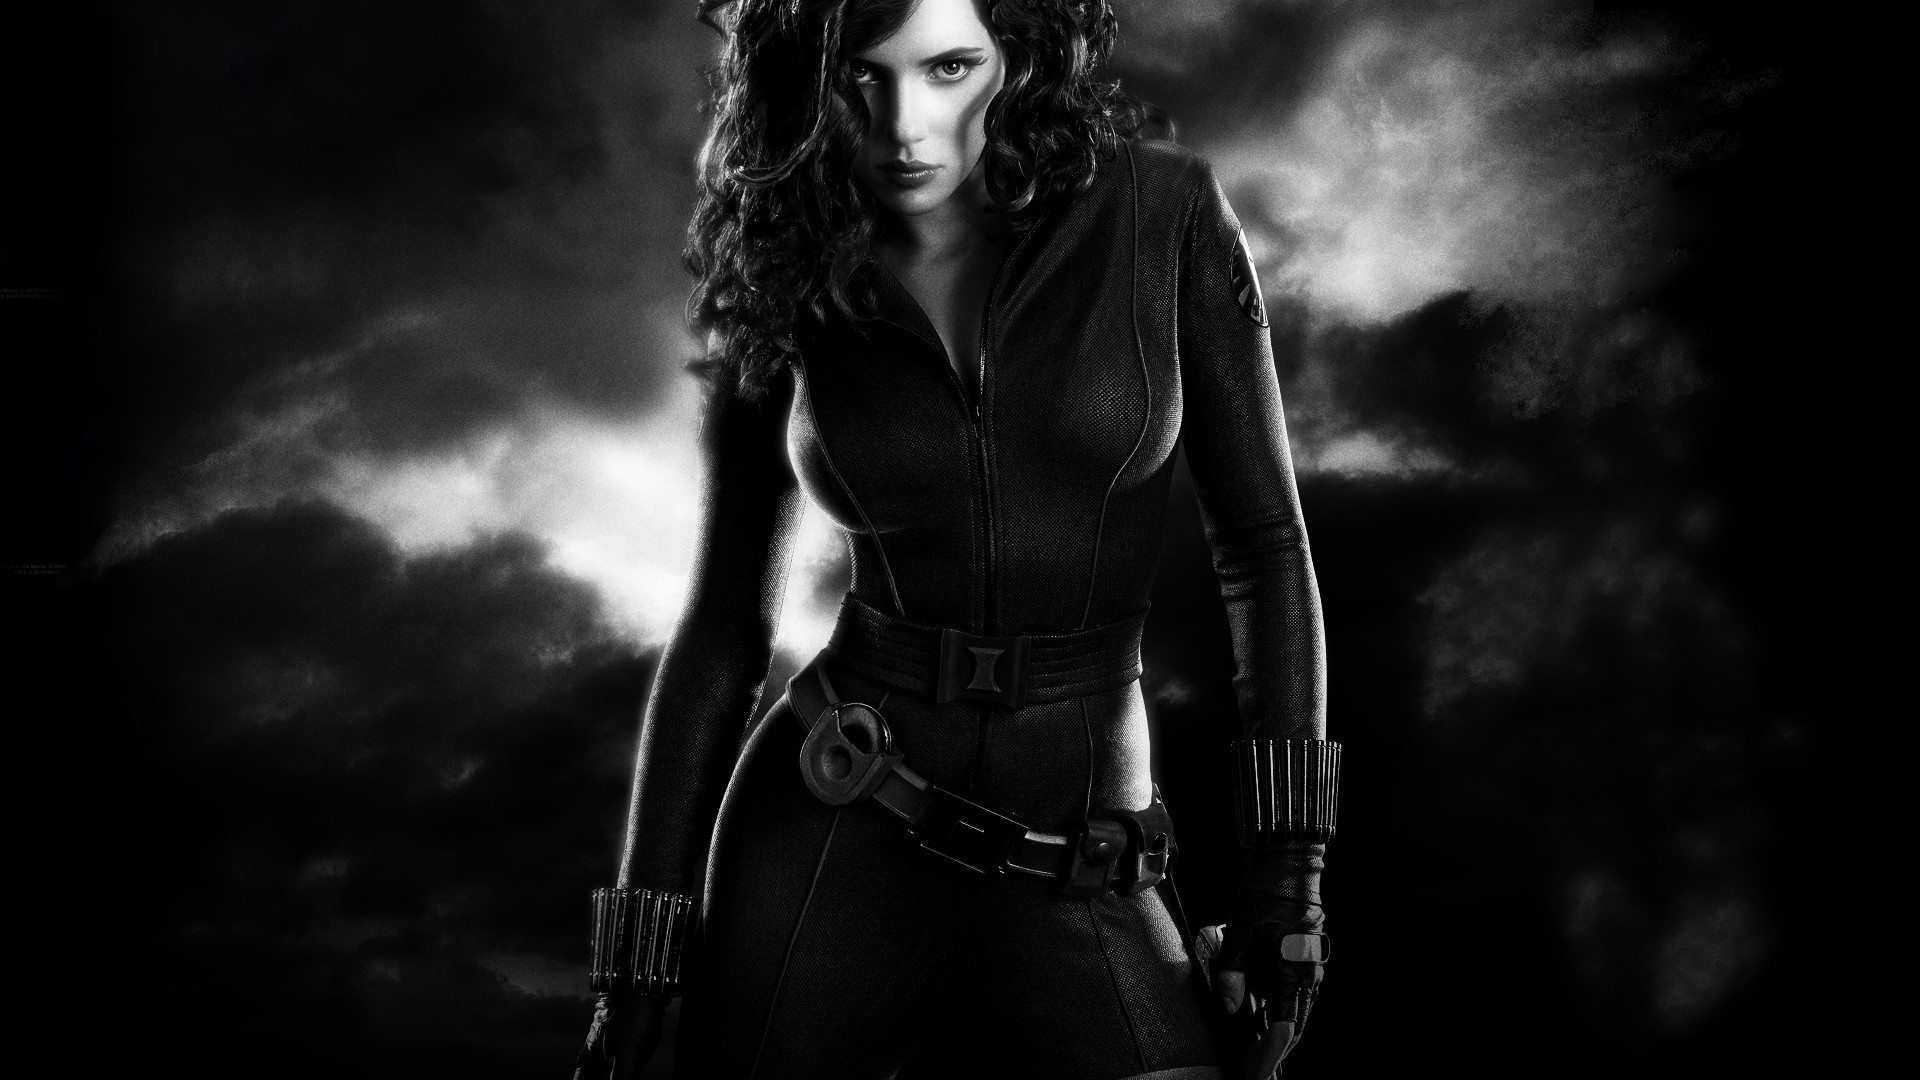 People 1920x1080 Black Widow Scarlett Johansson Marvel Comics monochrome Iron Man 2 superheroines Marvel Cinematic Universe movies women